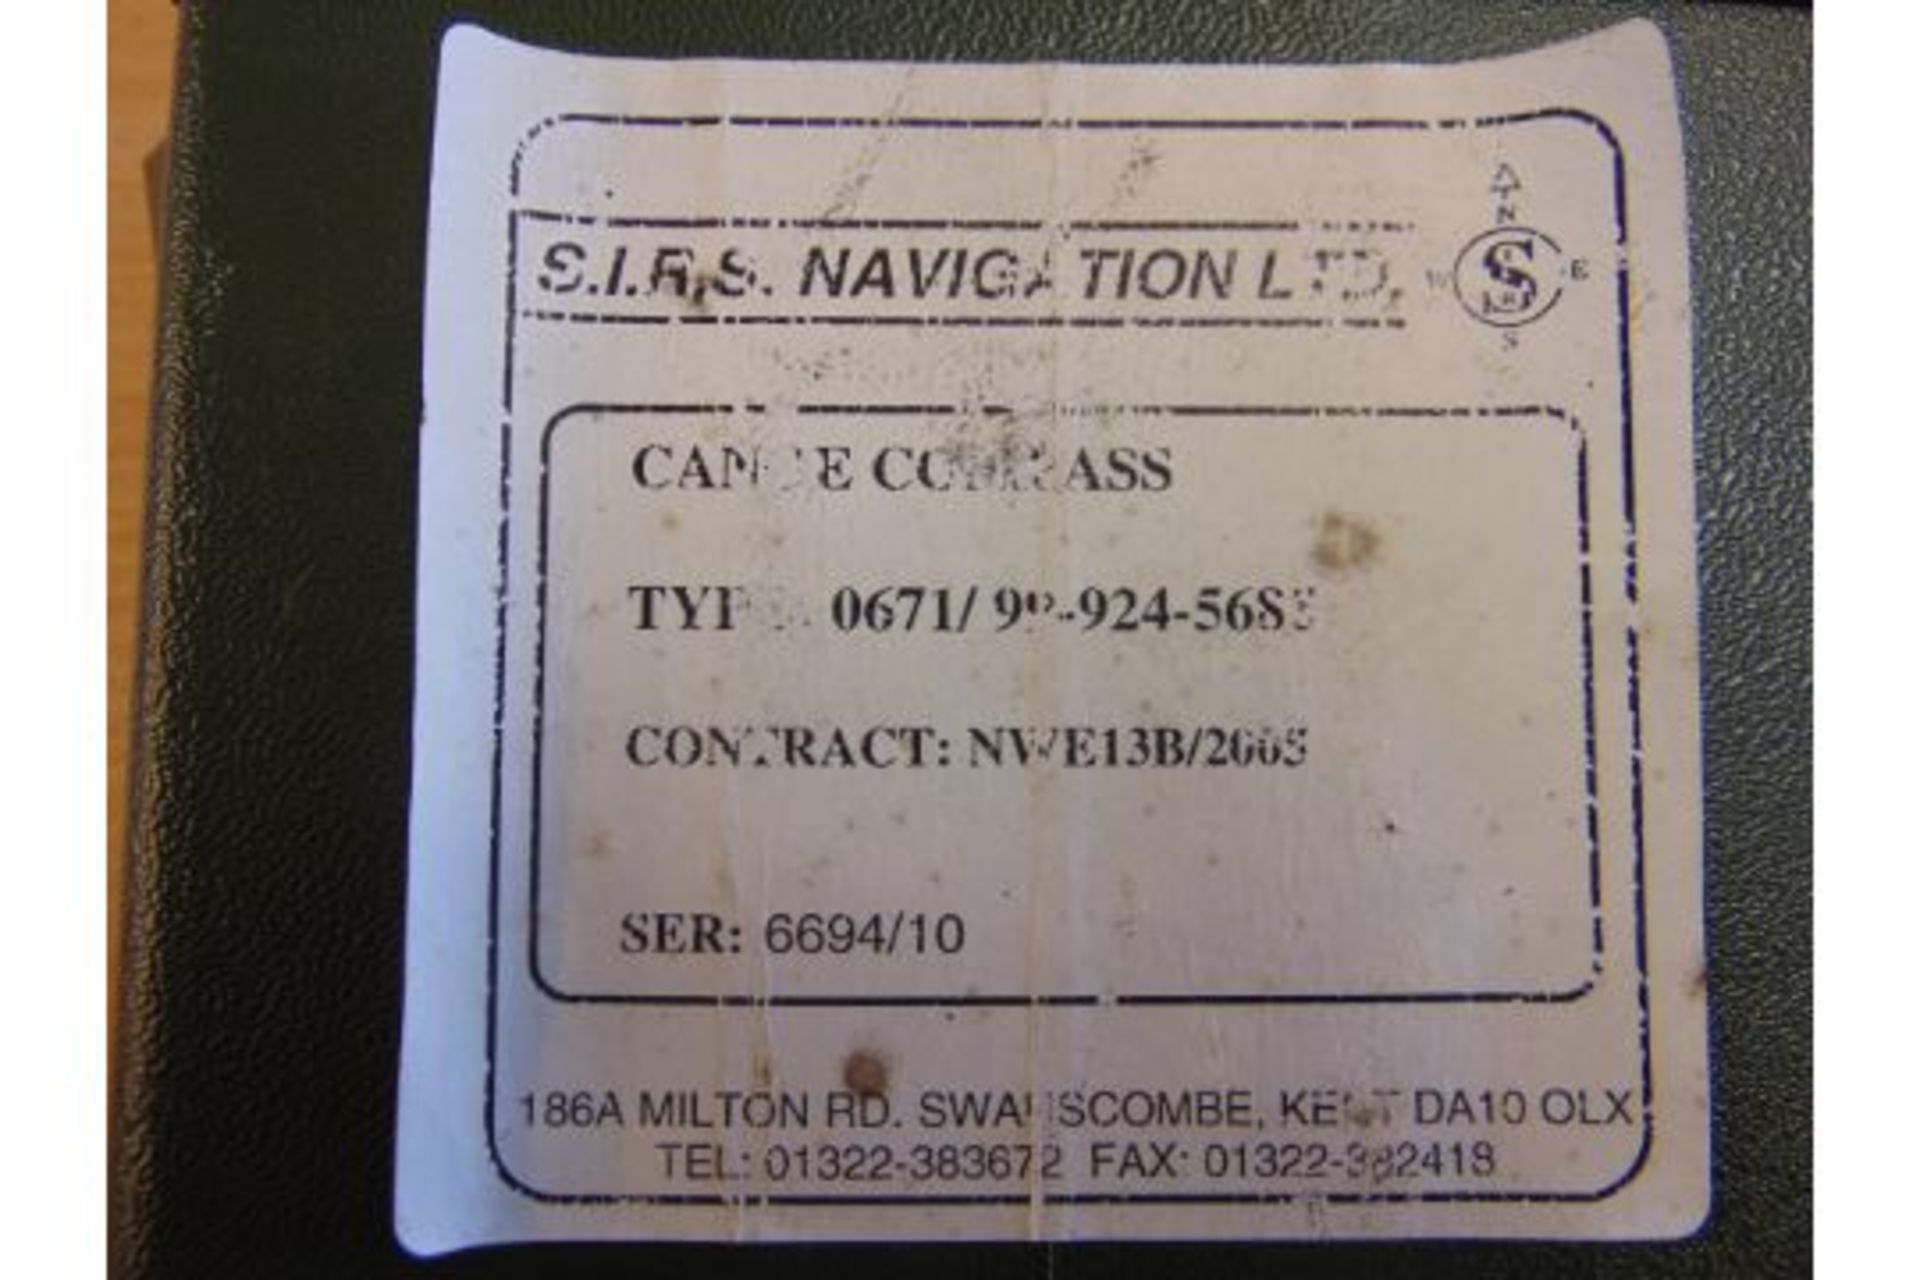 V. NICE SIRS NAVUGATION CANOE COMPASS USED BY SAS, SBS, ETC IN ORIGINAL TRANSIT CASE - Bild 6 aus 6